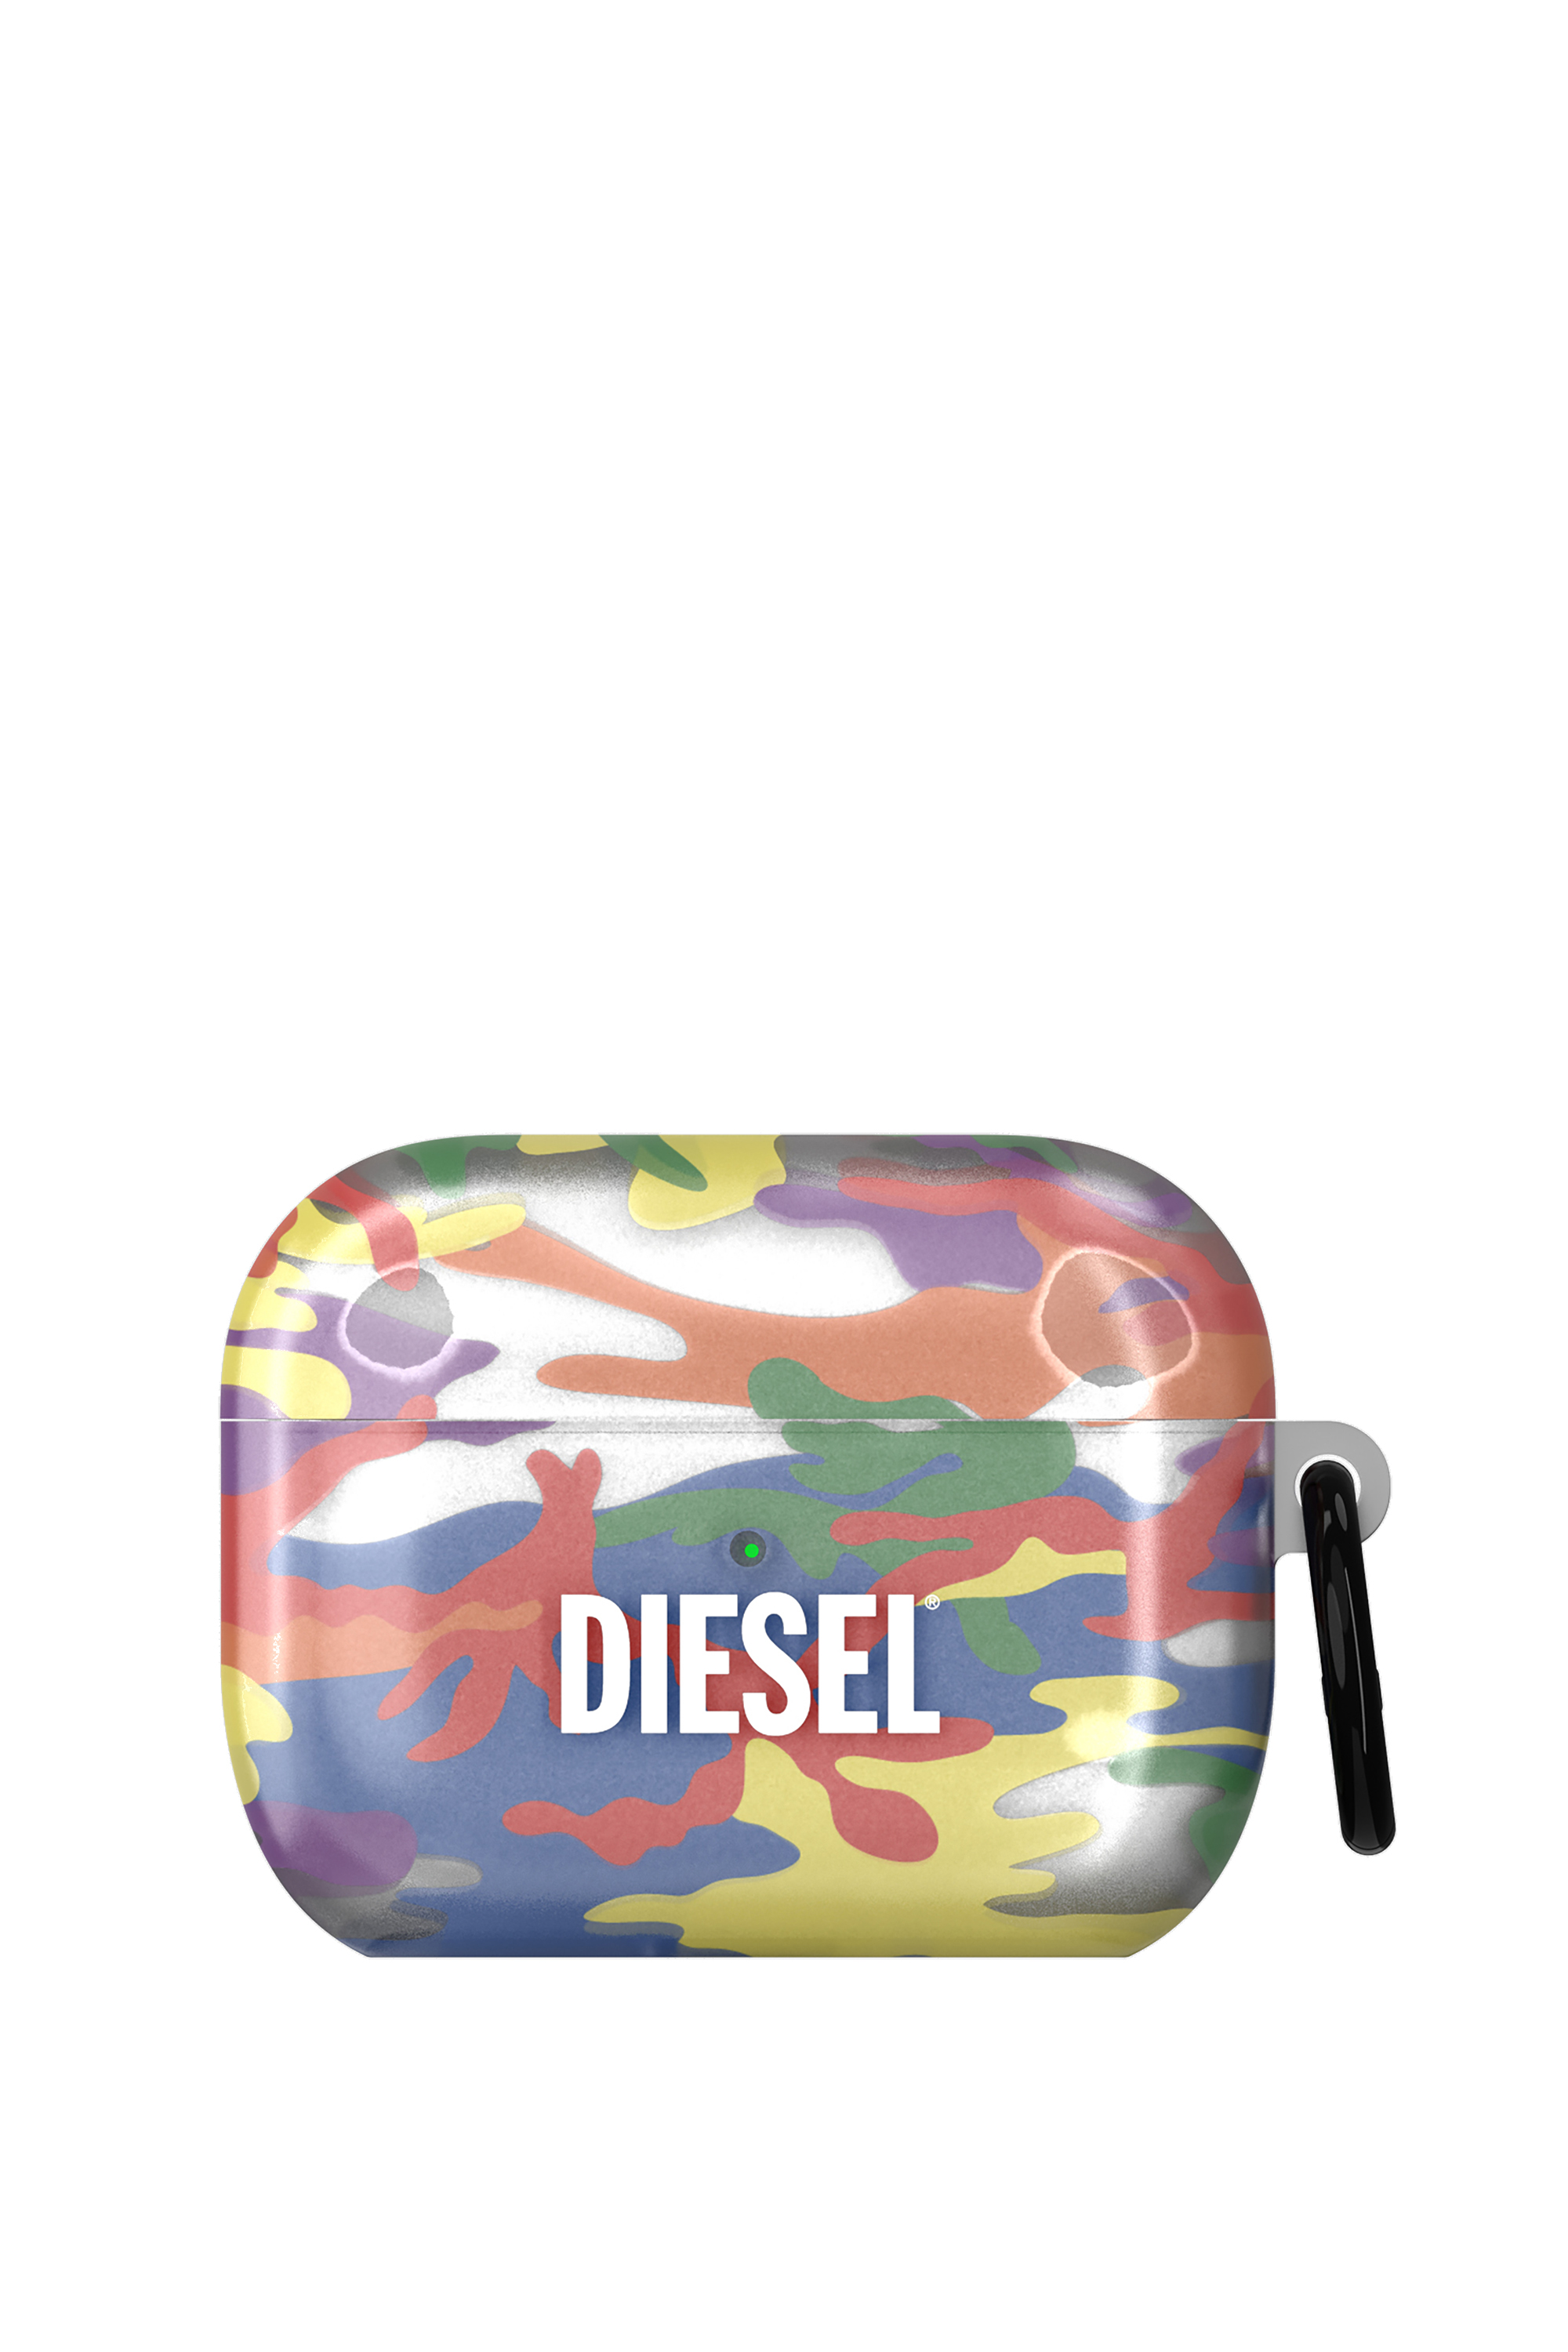 Diesel - 44344, Multicolore - Image 1